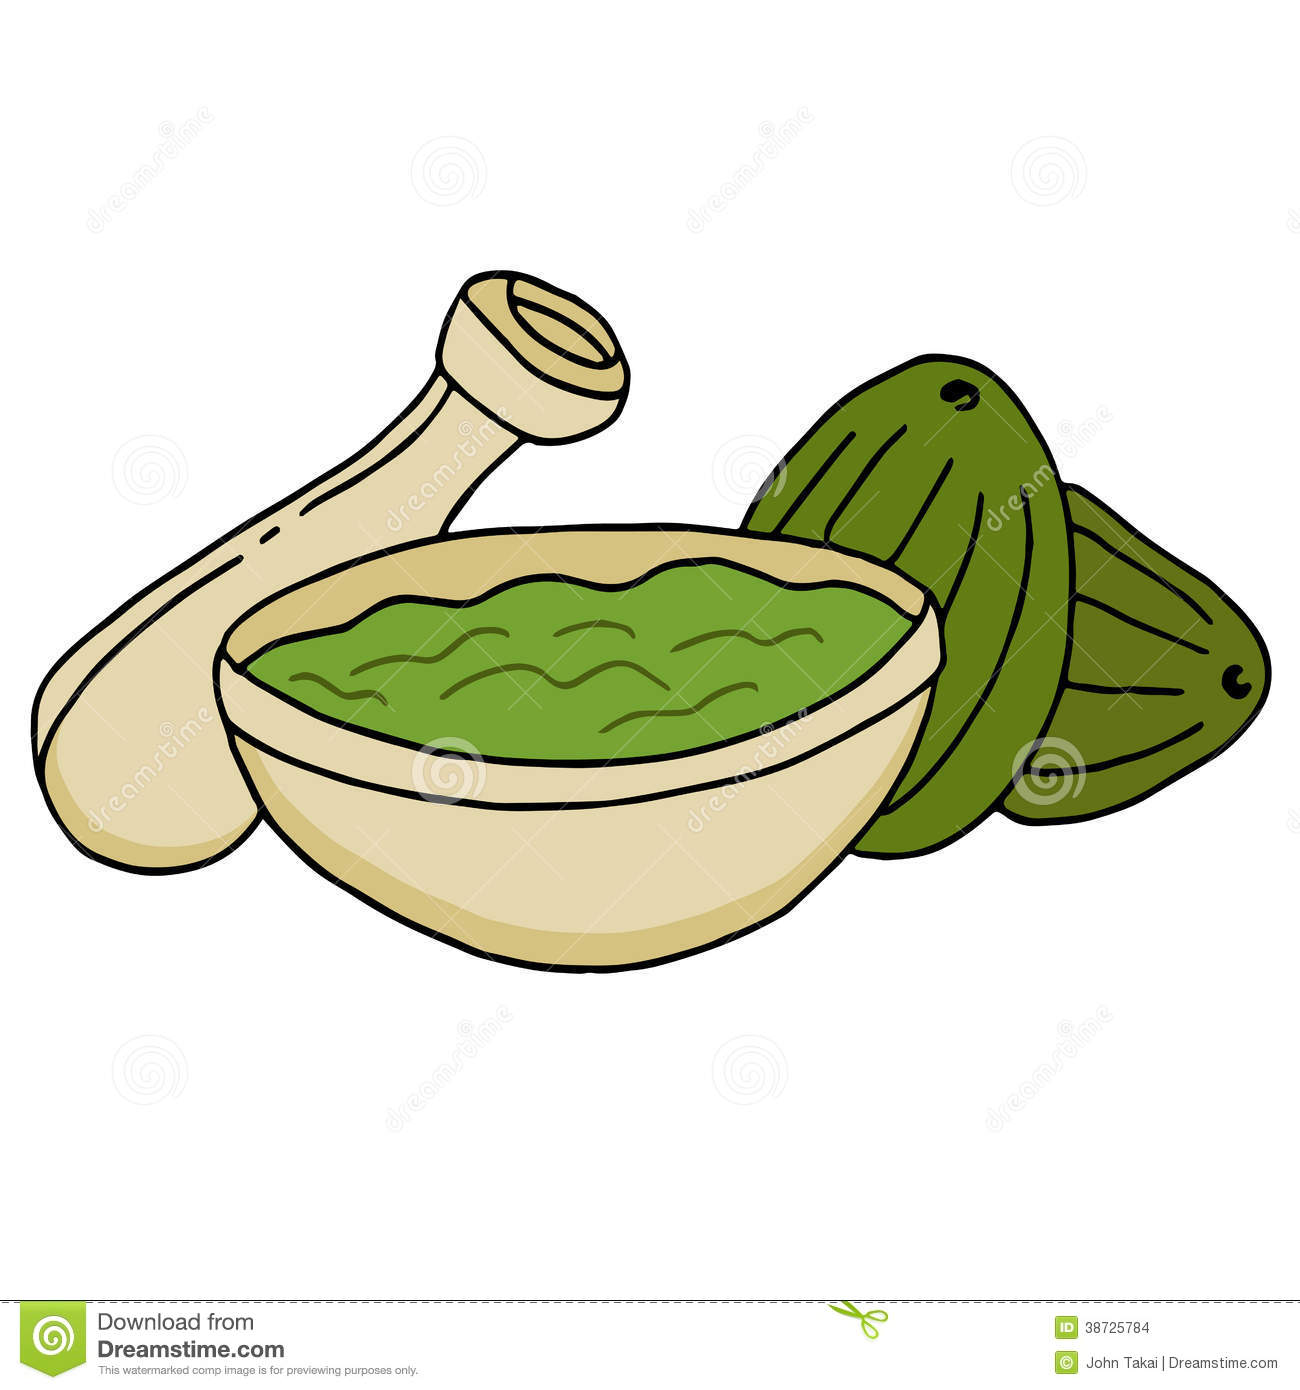 Guacamole Clipart An Image Of Avocados And Guacamole In A Bowl  Mr  No    